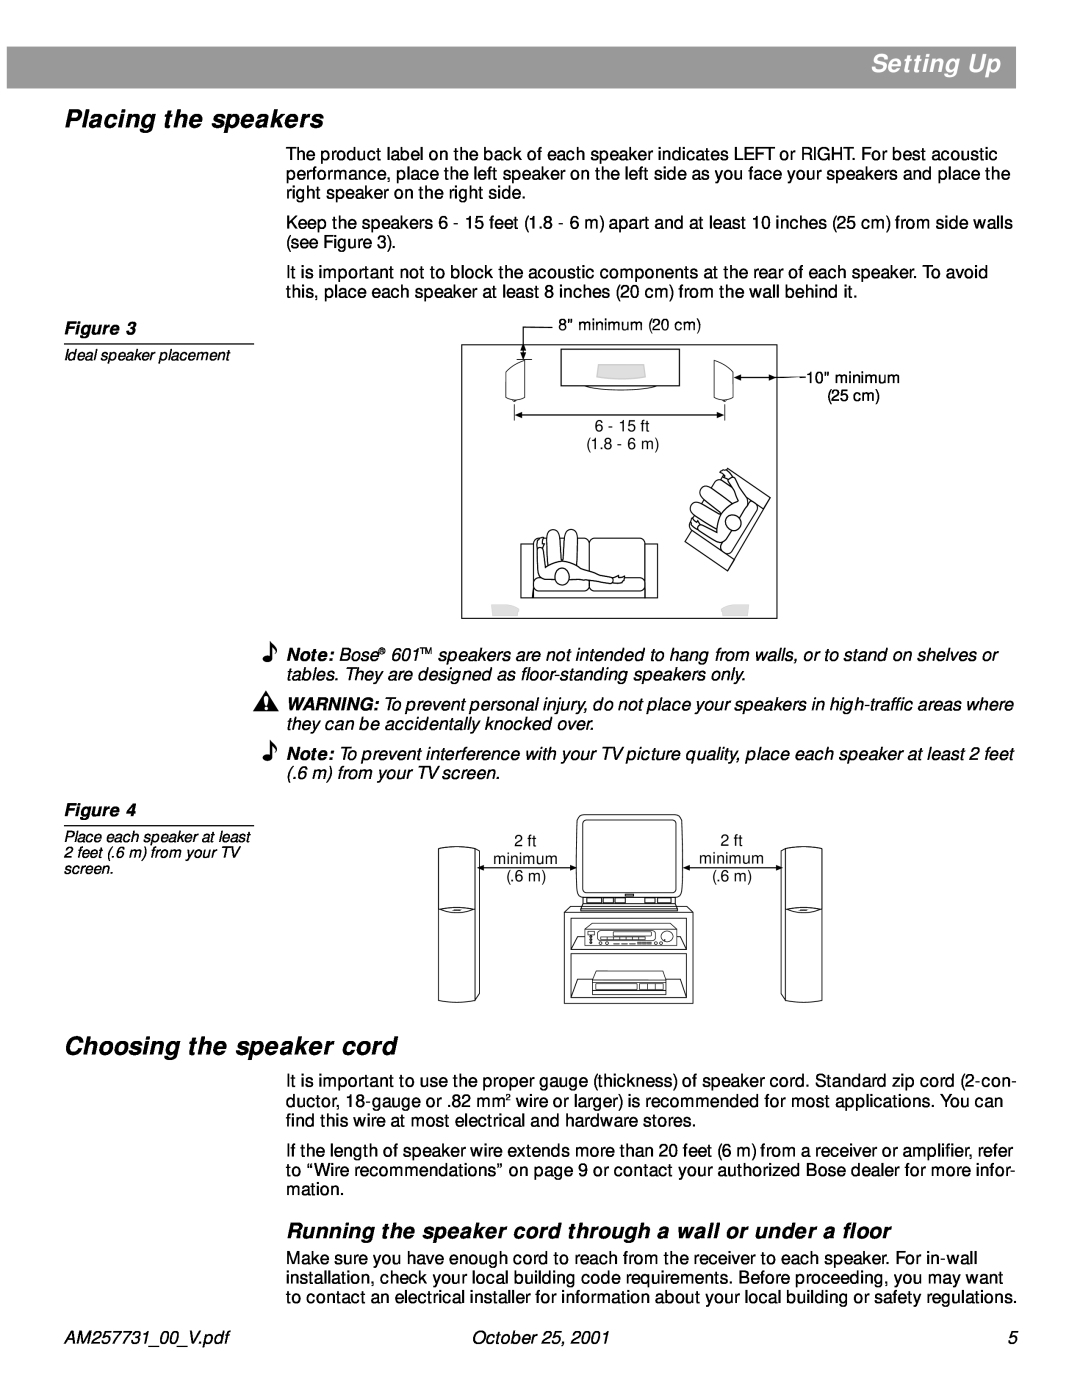 Bose 601TM manual Placing the speakers, Choosing the speaker cord, Setting Up, October 